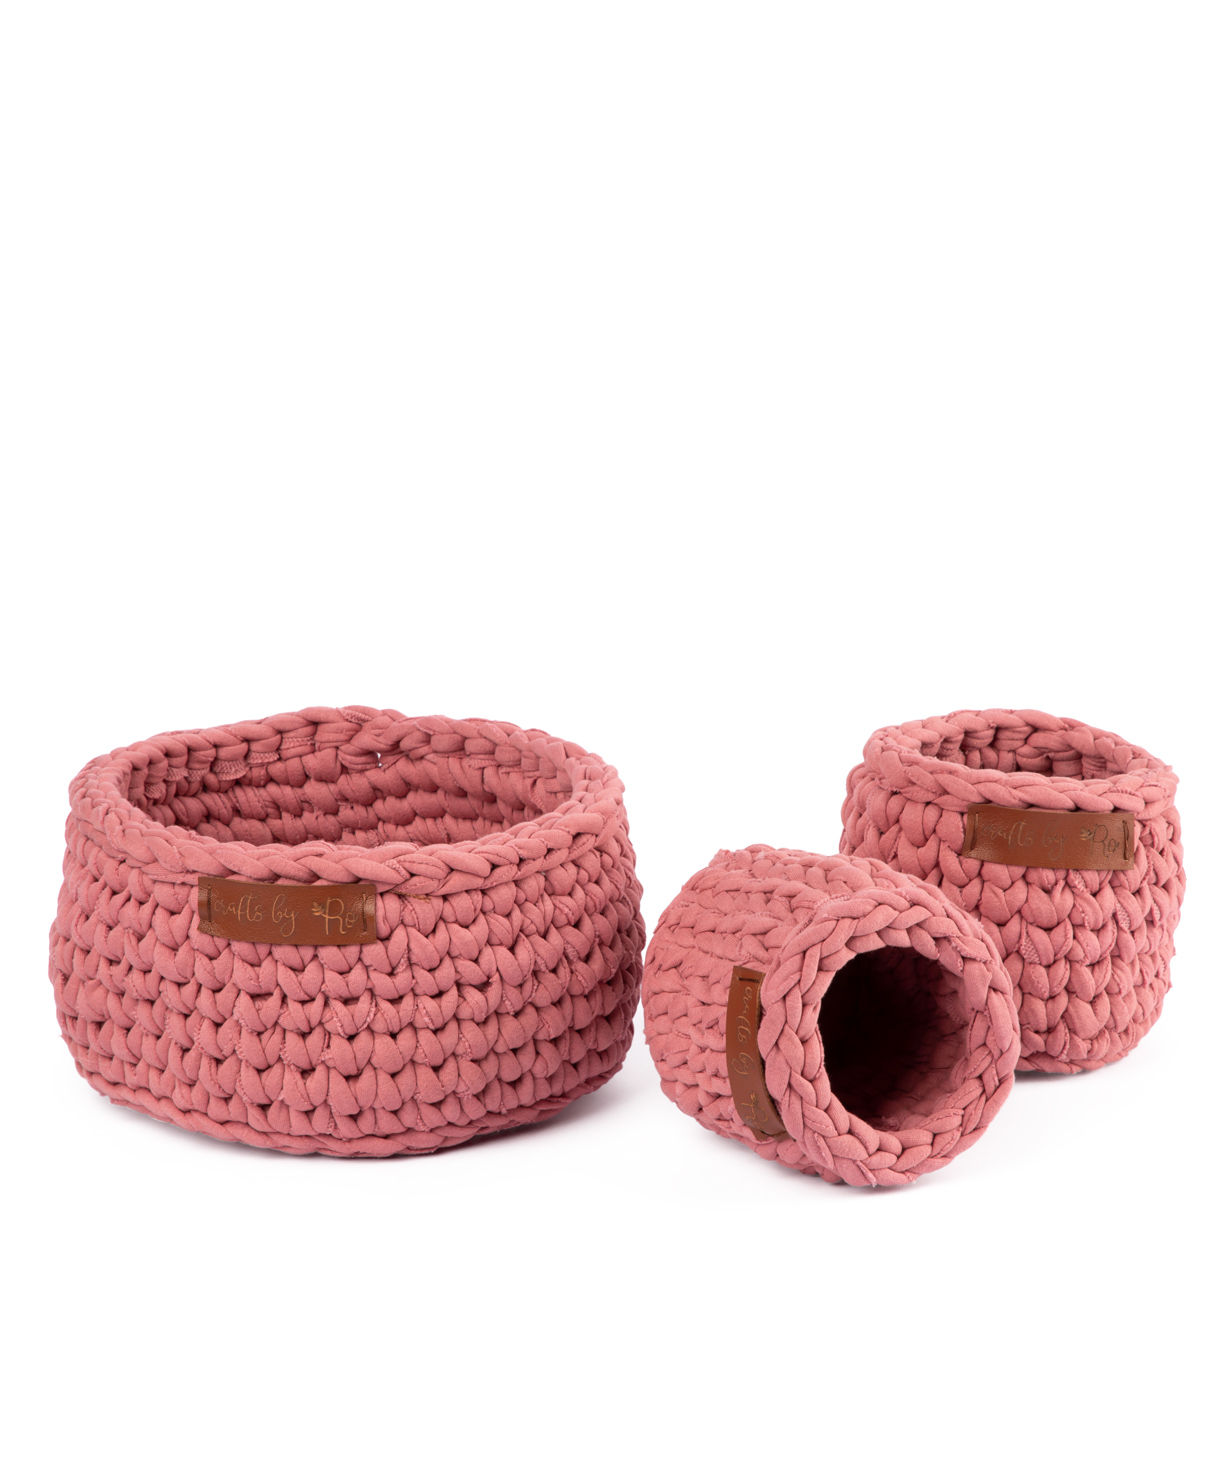 Collection `Ro Handmade` of handmade cotton baskets №1